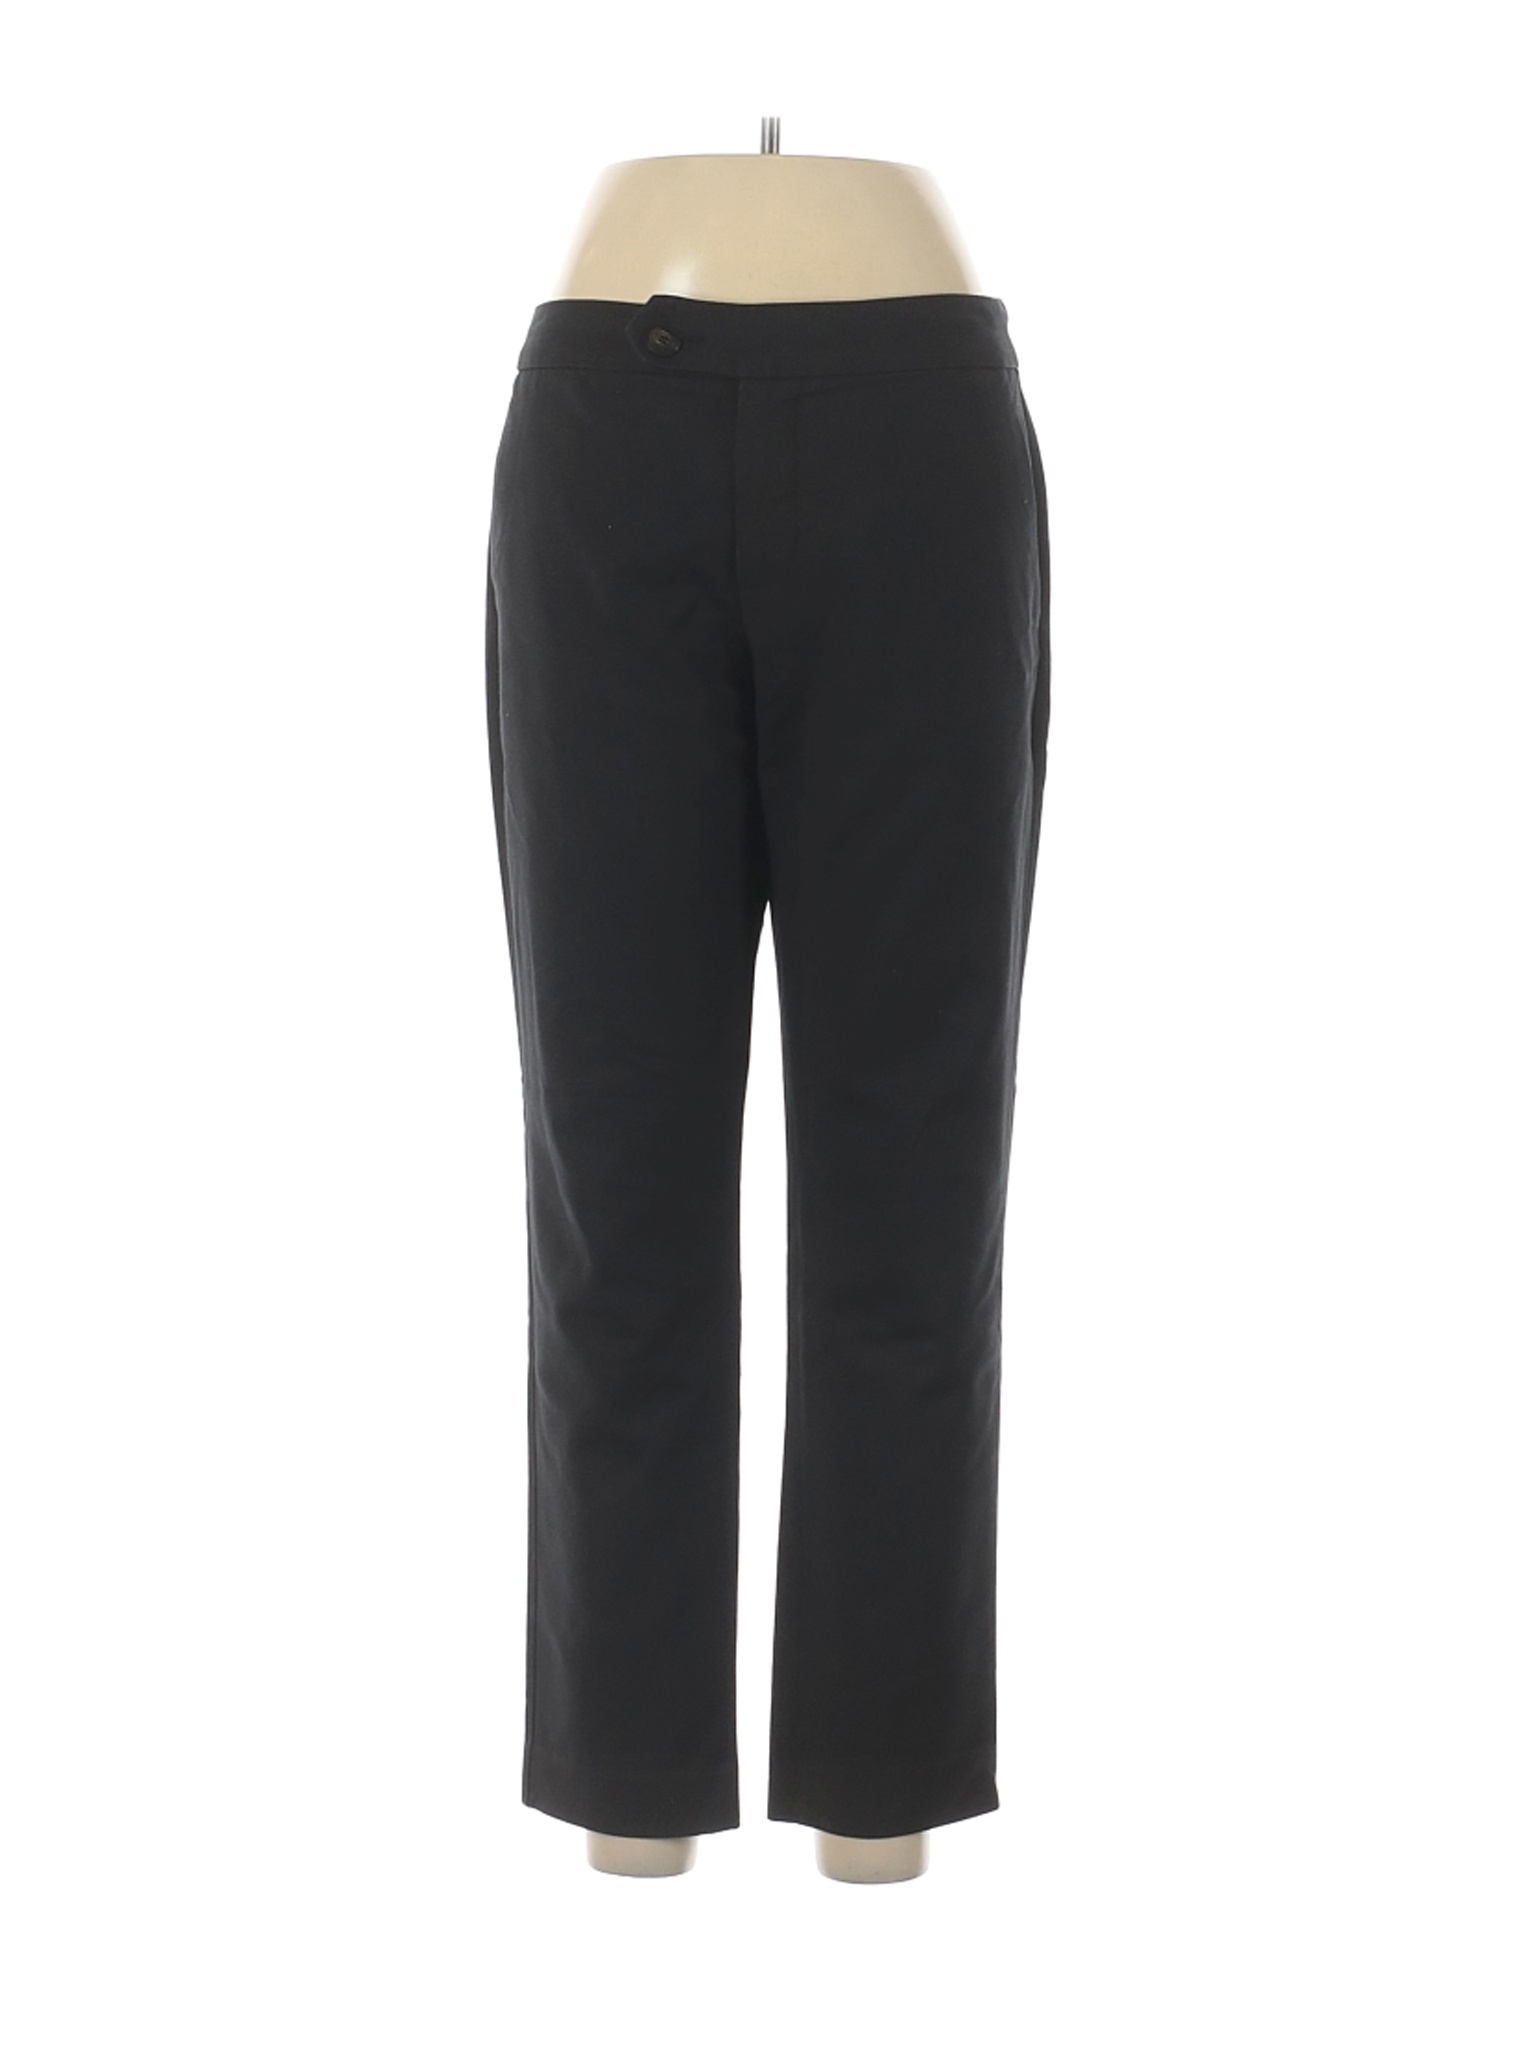 MNG Basics Women Black Dress Pants 6 | eBay